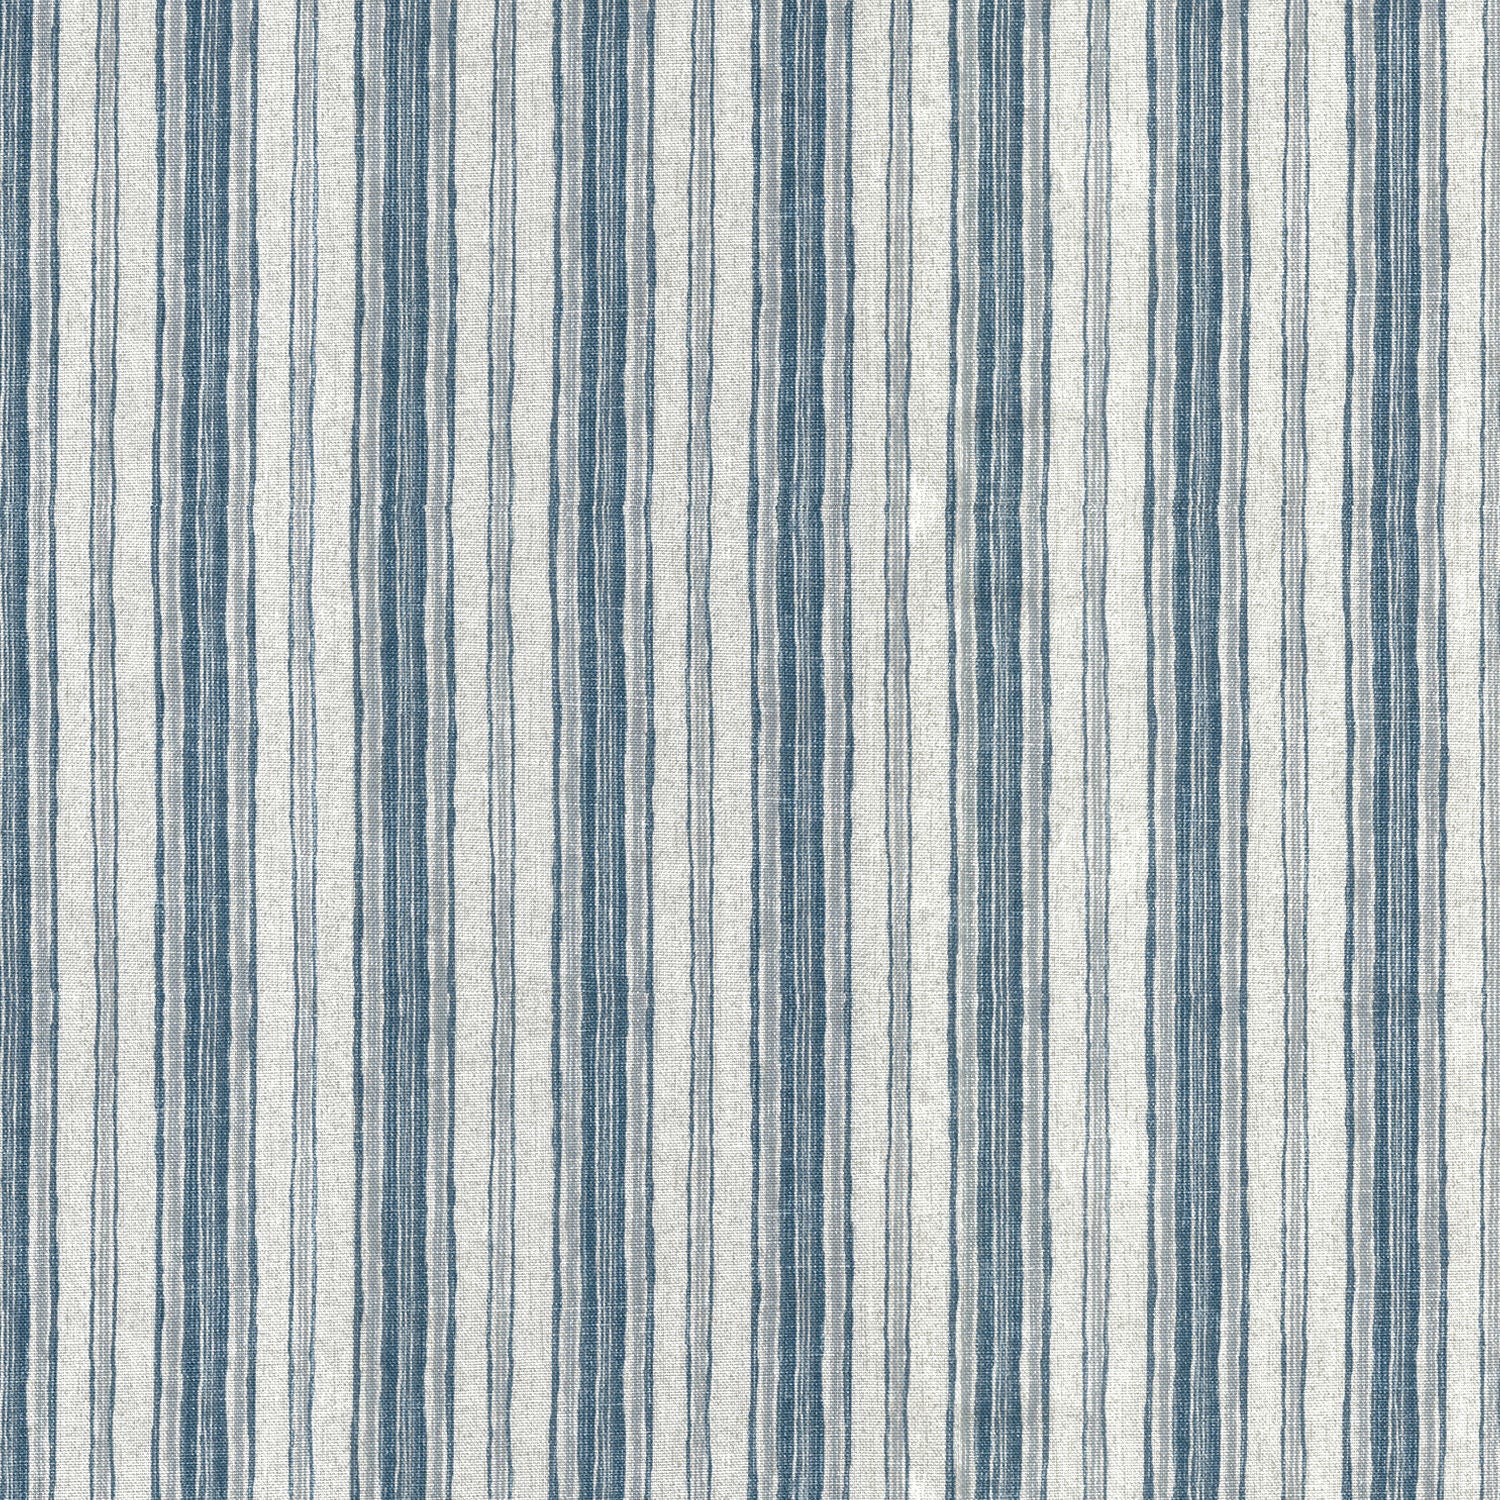 scallop valance in brunswick denim blue stripe